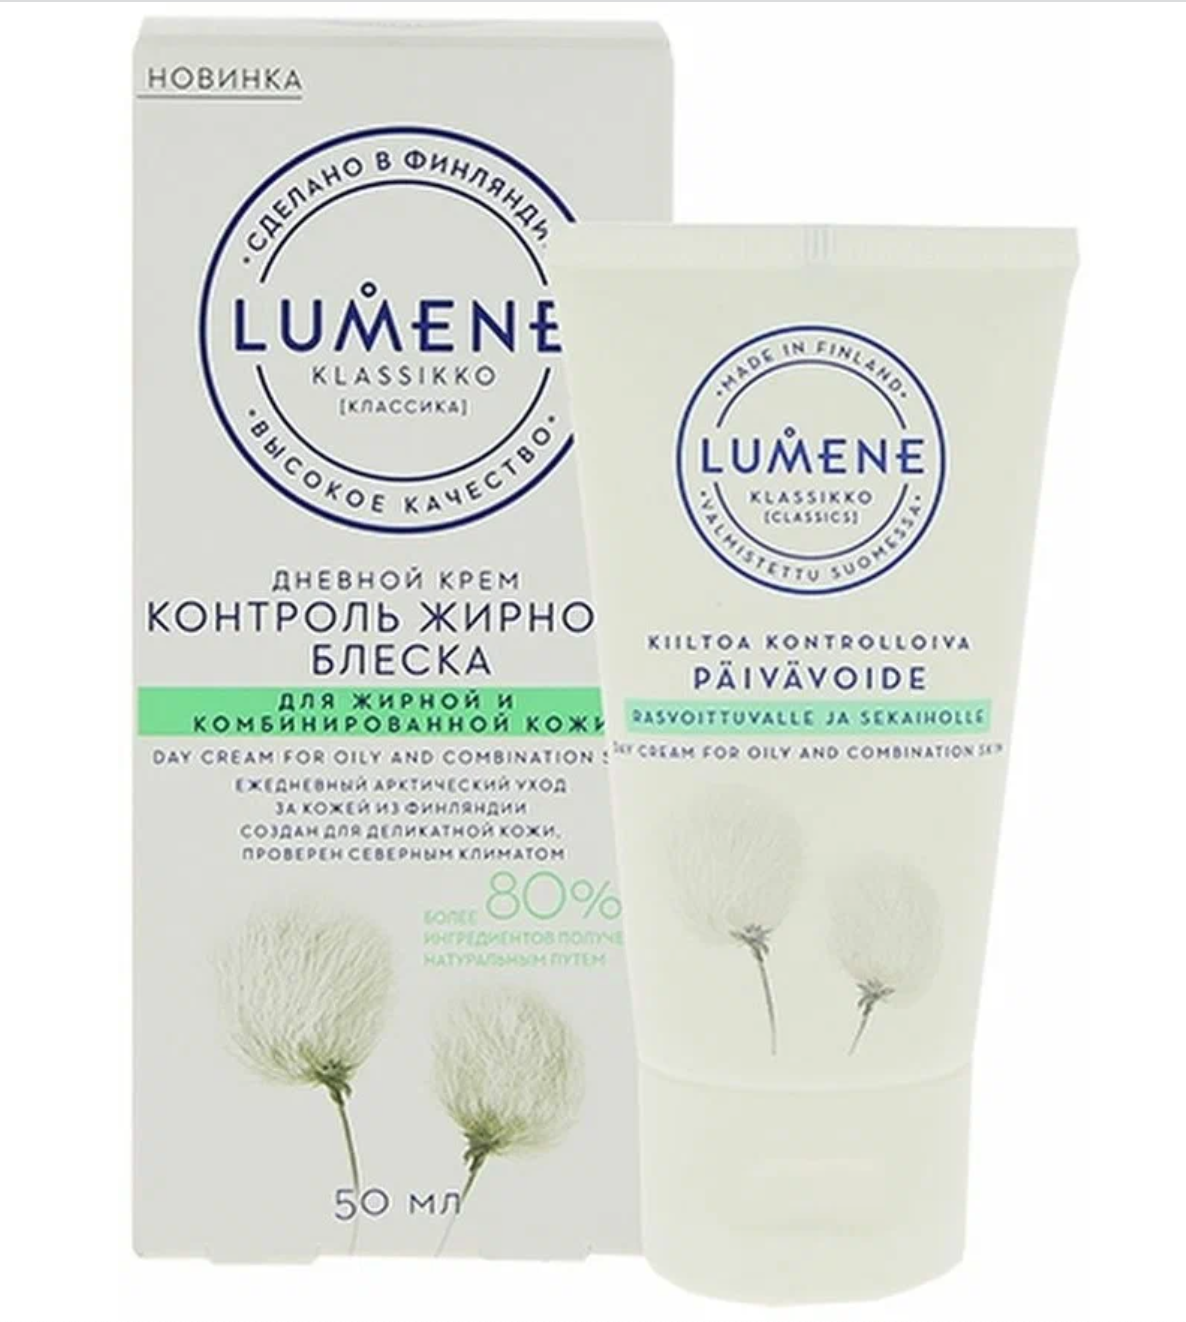 Lumene Klassikko Day Cream For Oily and Combination Skin Дневной крем для лица Контроль жирного блеска, 50 мл